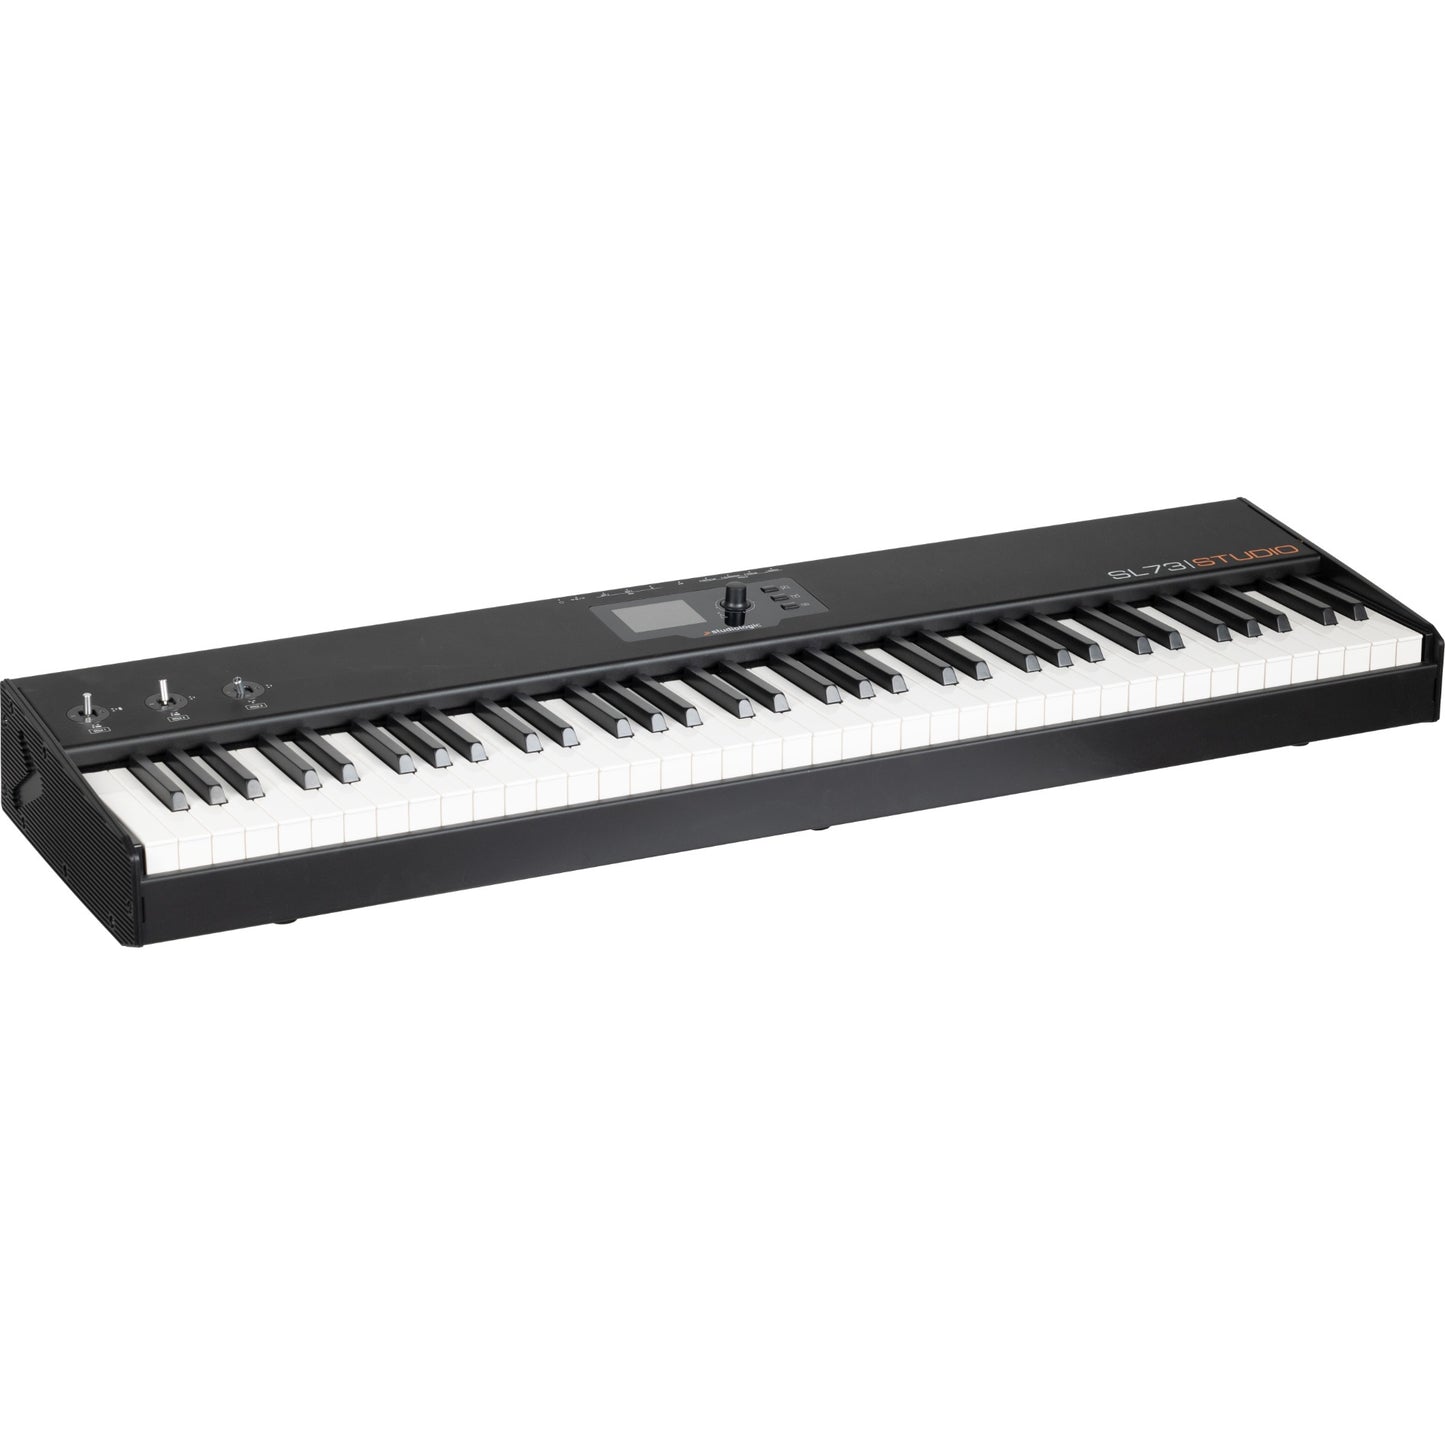 StudioLogic SL73 Studio - 73-Key USB/MIDI Keyboard Controller